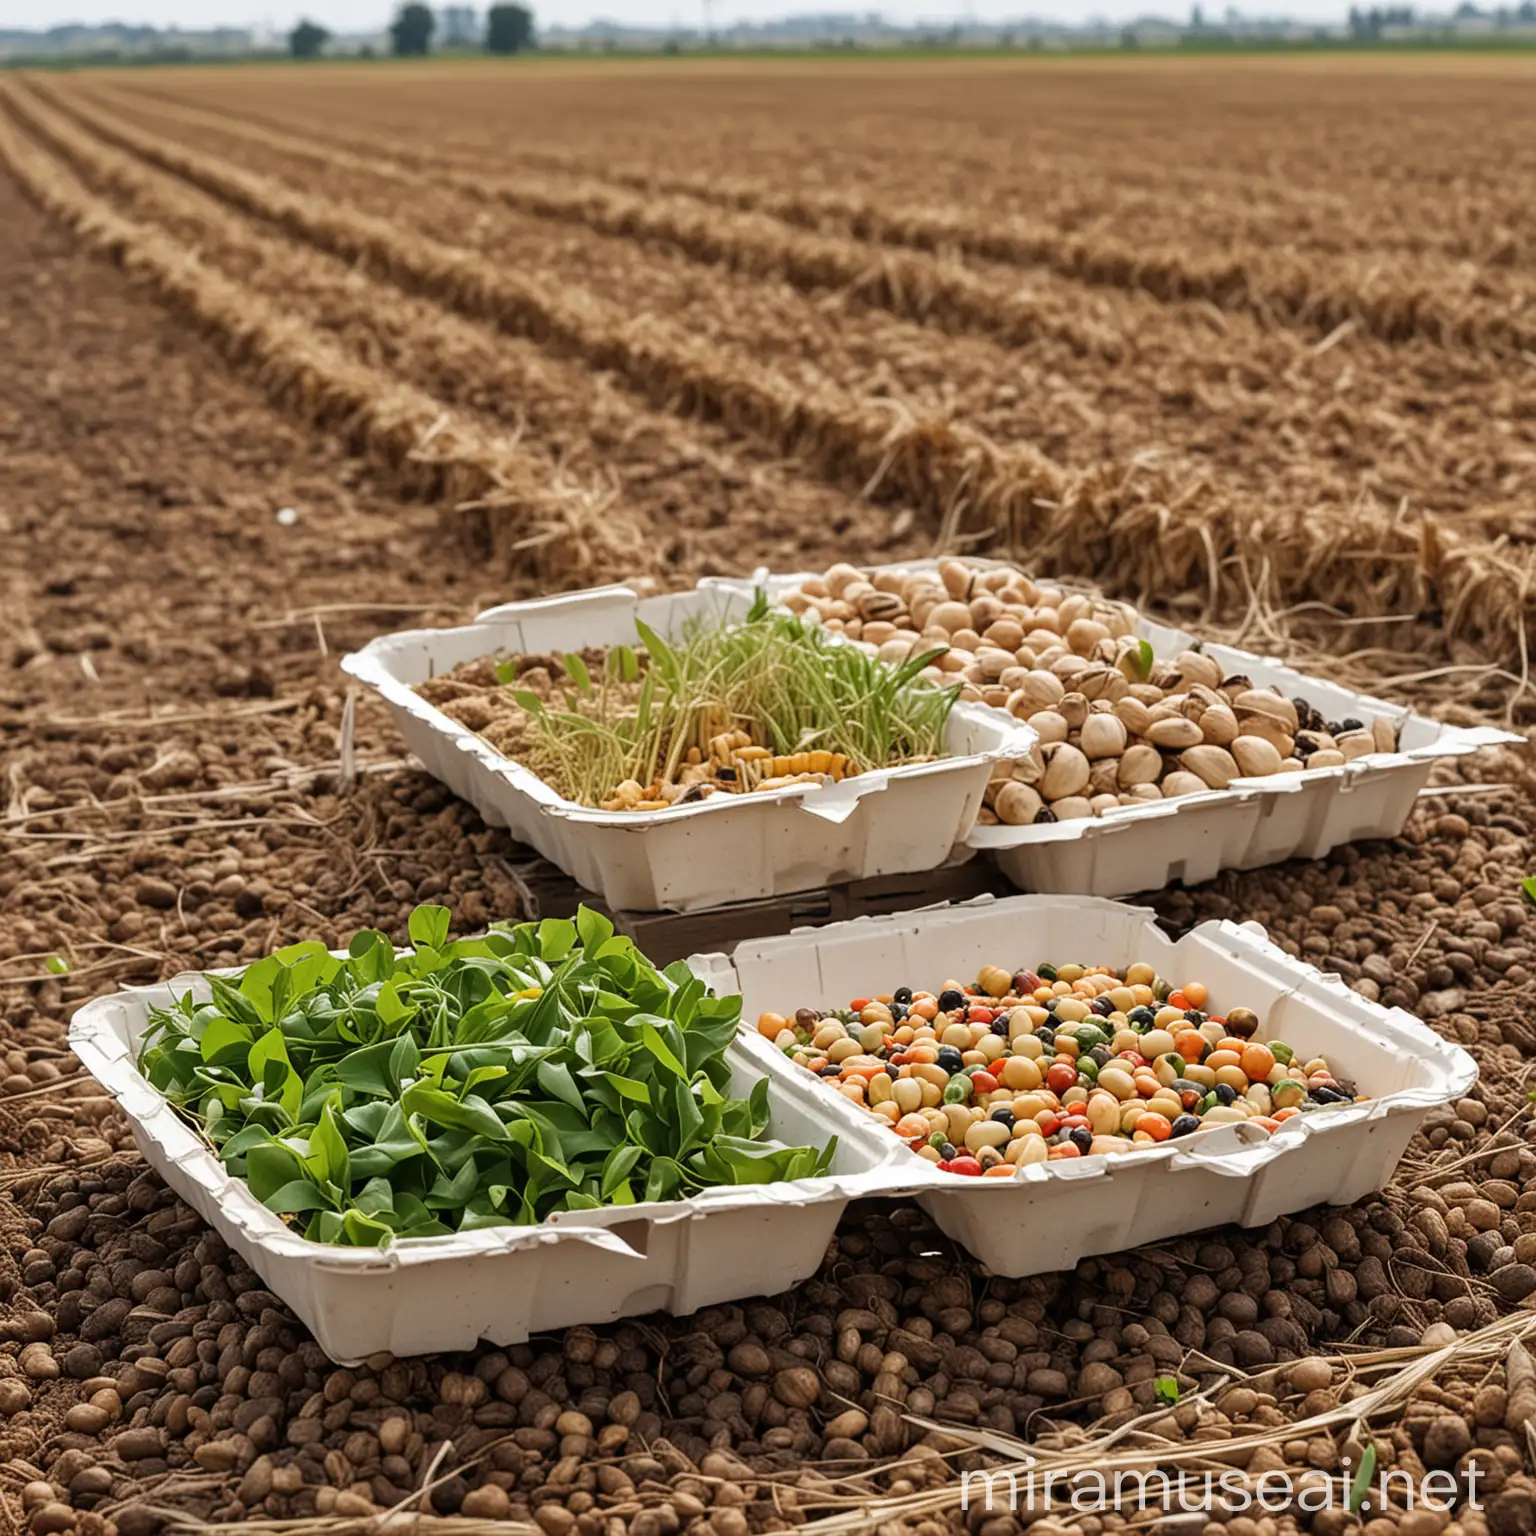 EcoFriendly Food Trays with Bountiful AgroResidual Crops